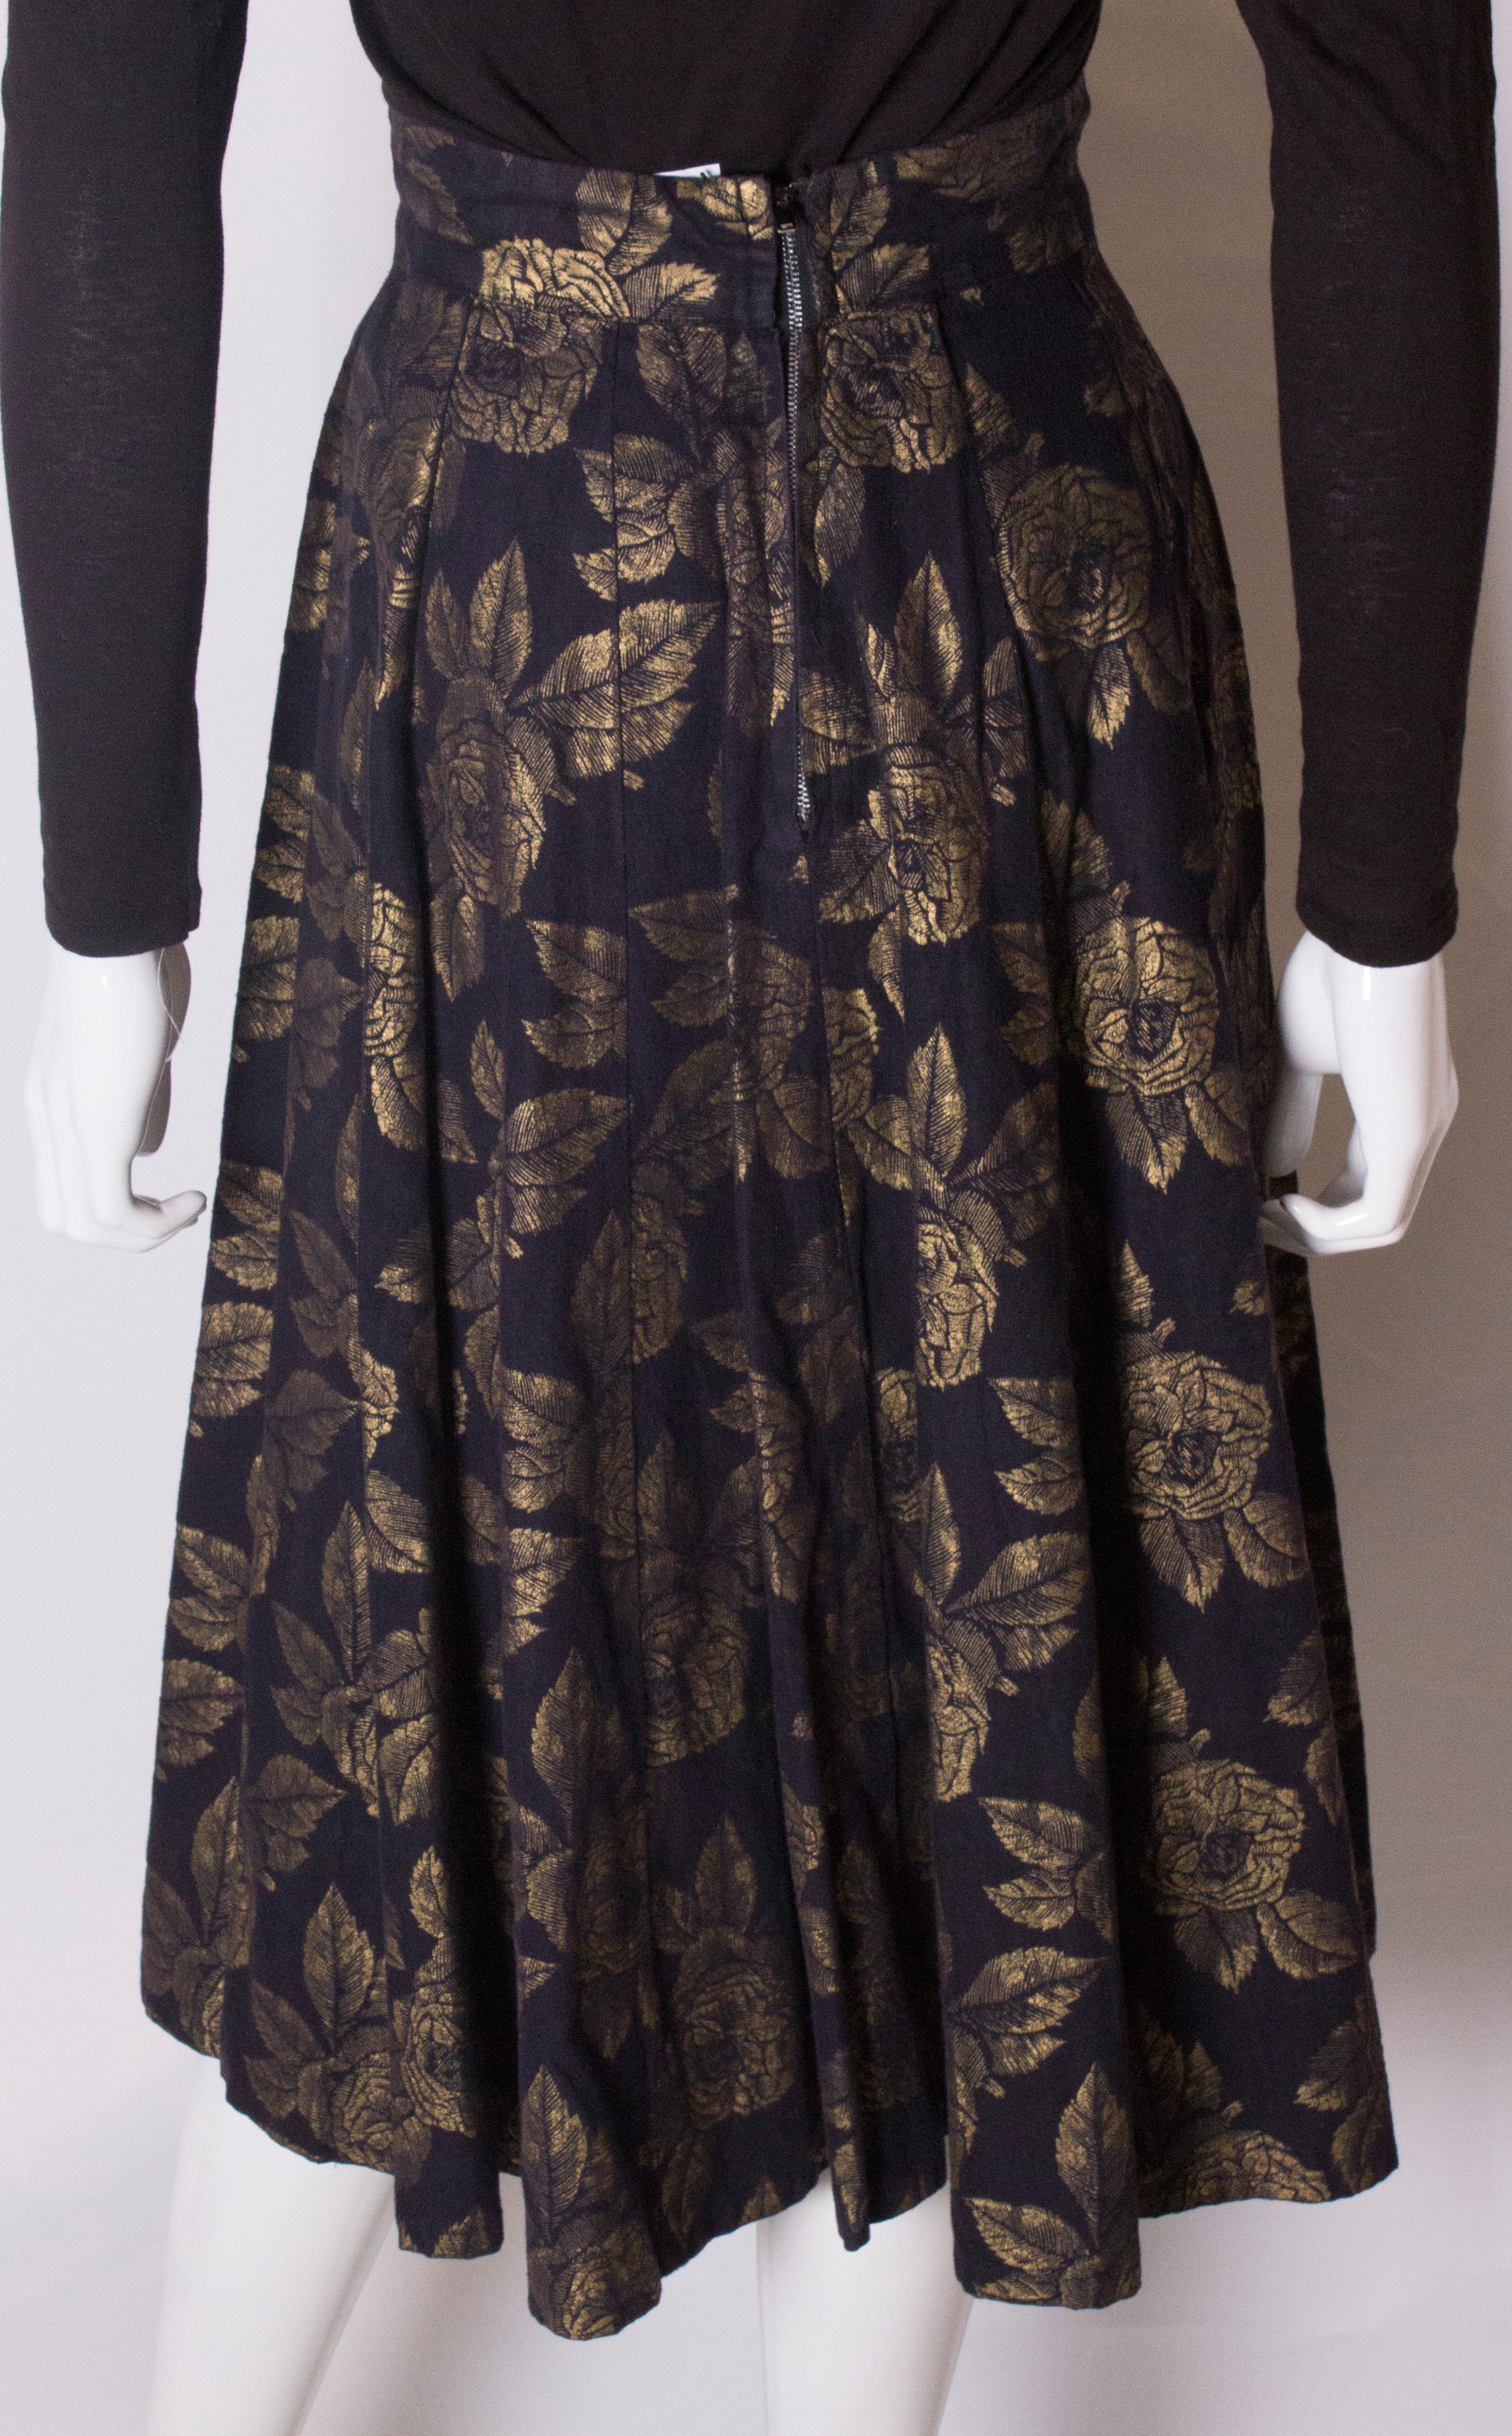 Vintage Black and Gold Skirt with Floral Design For Sale 1